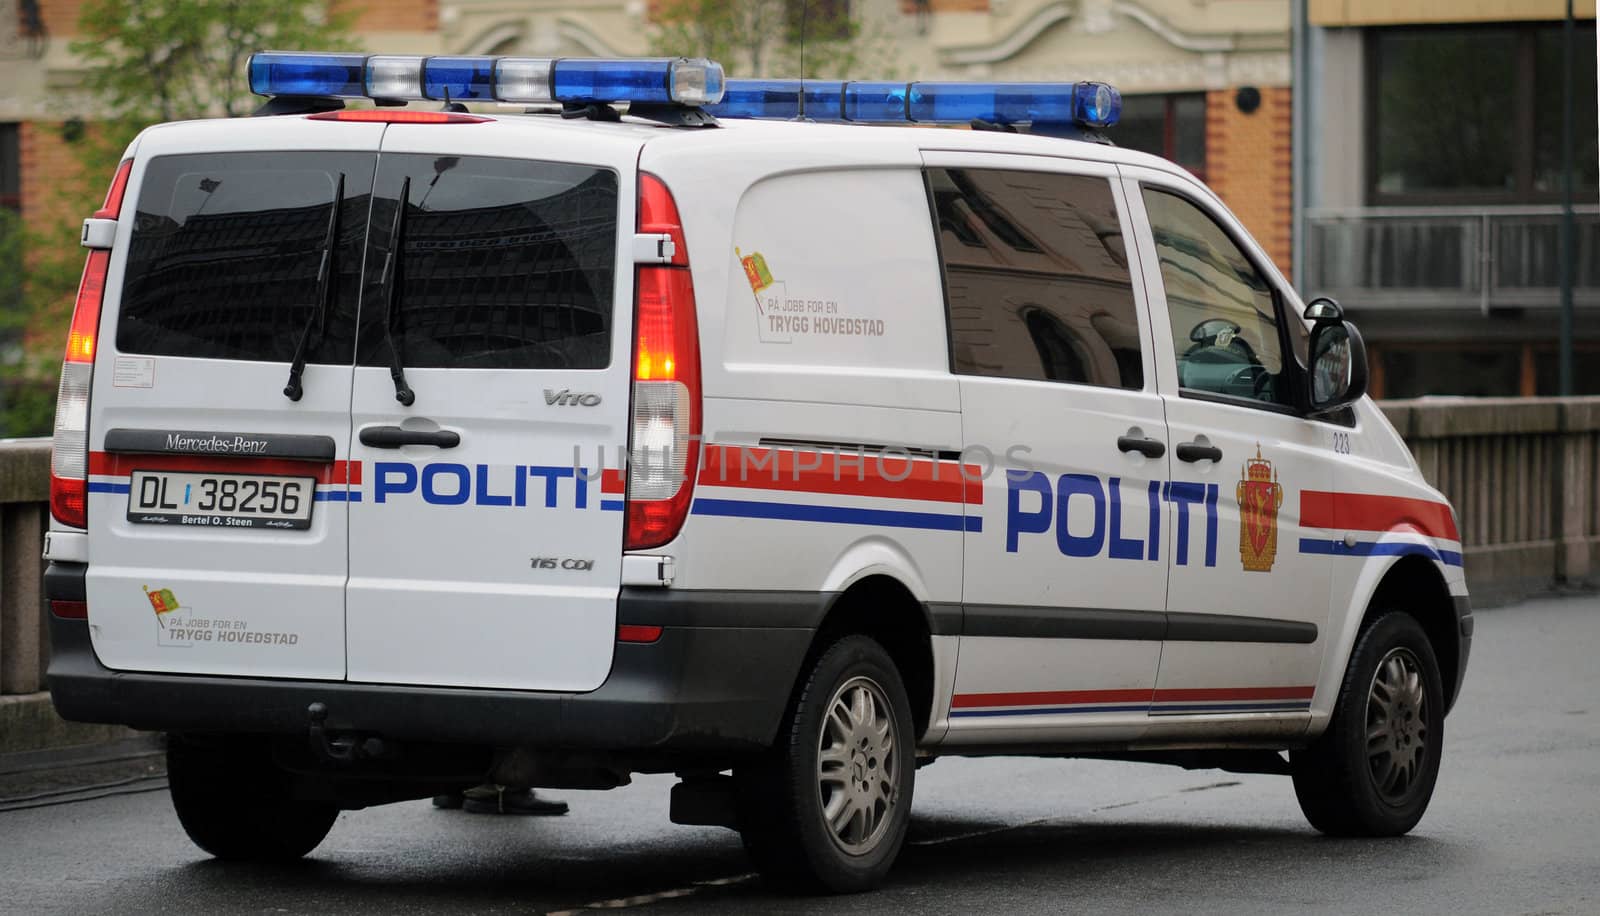 Norwegian Police car by Espevalen